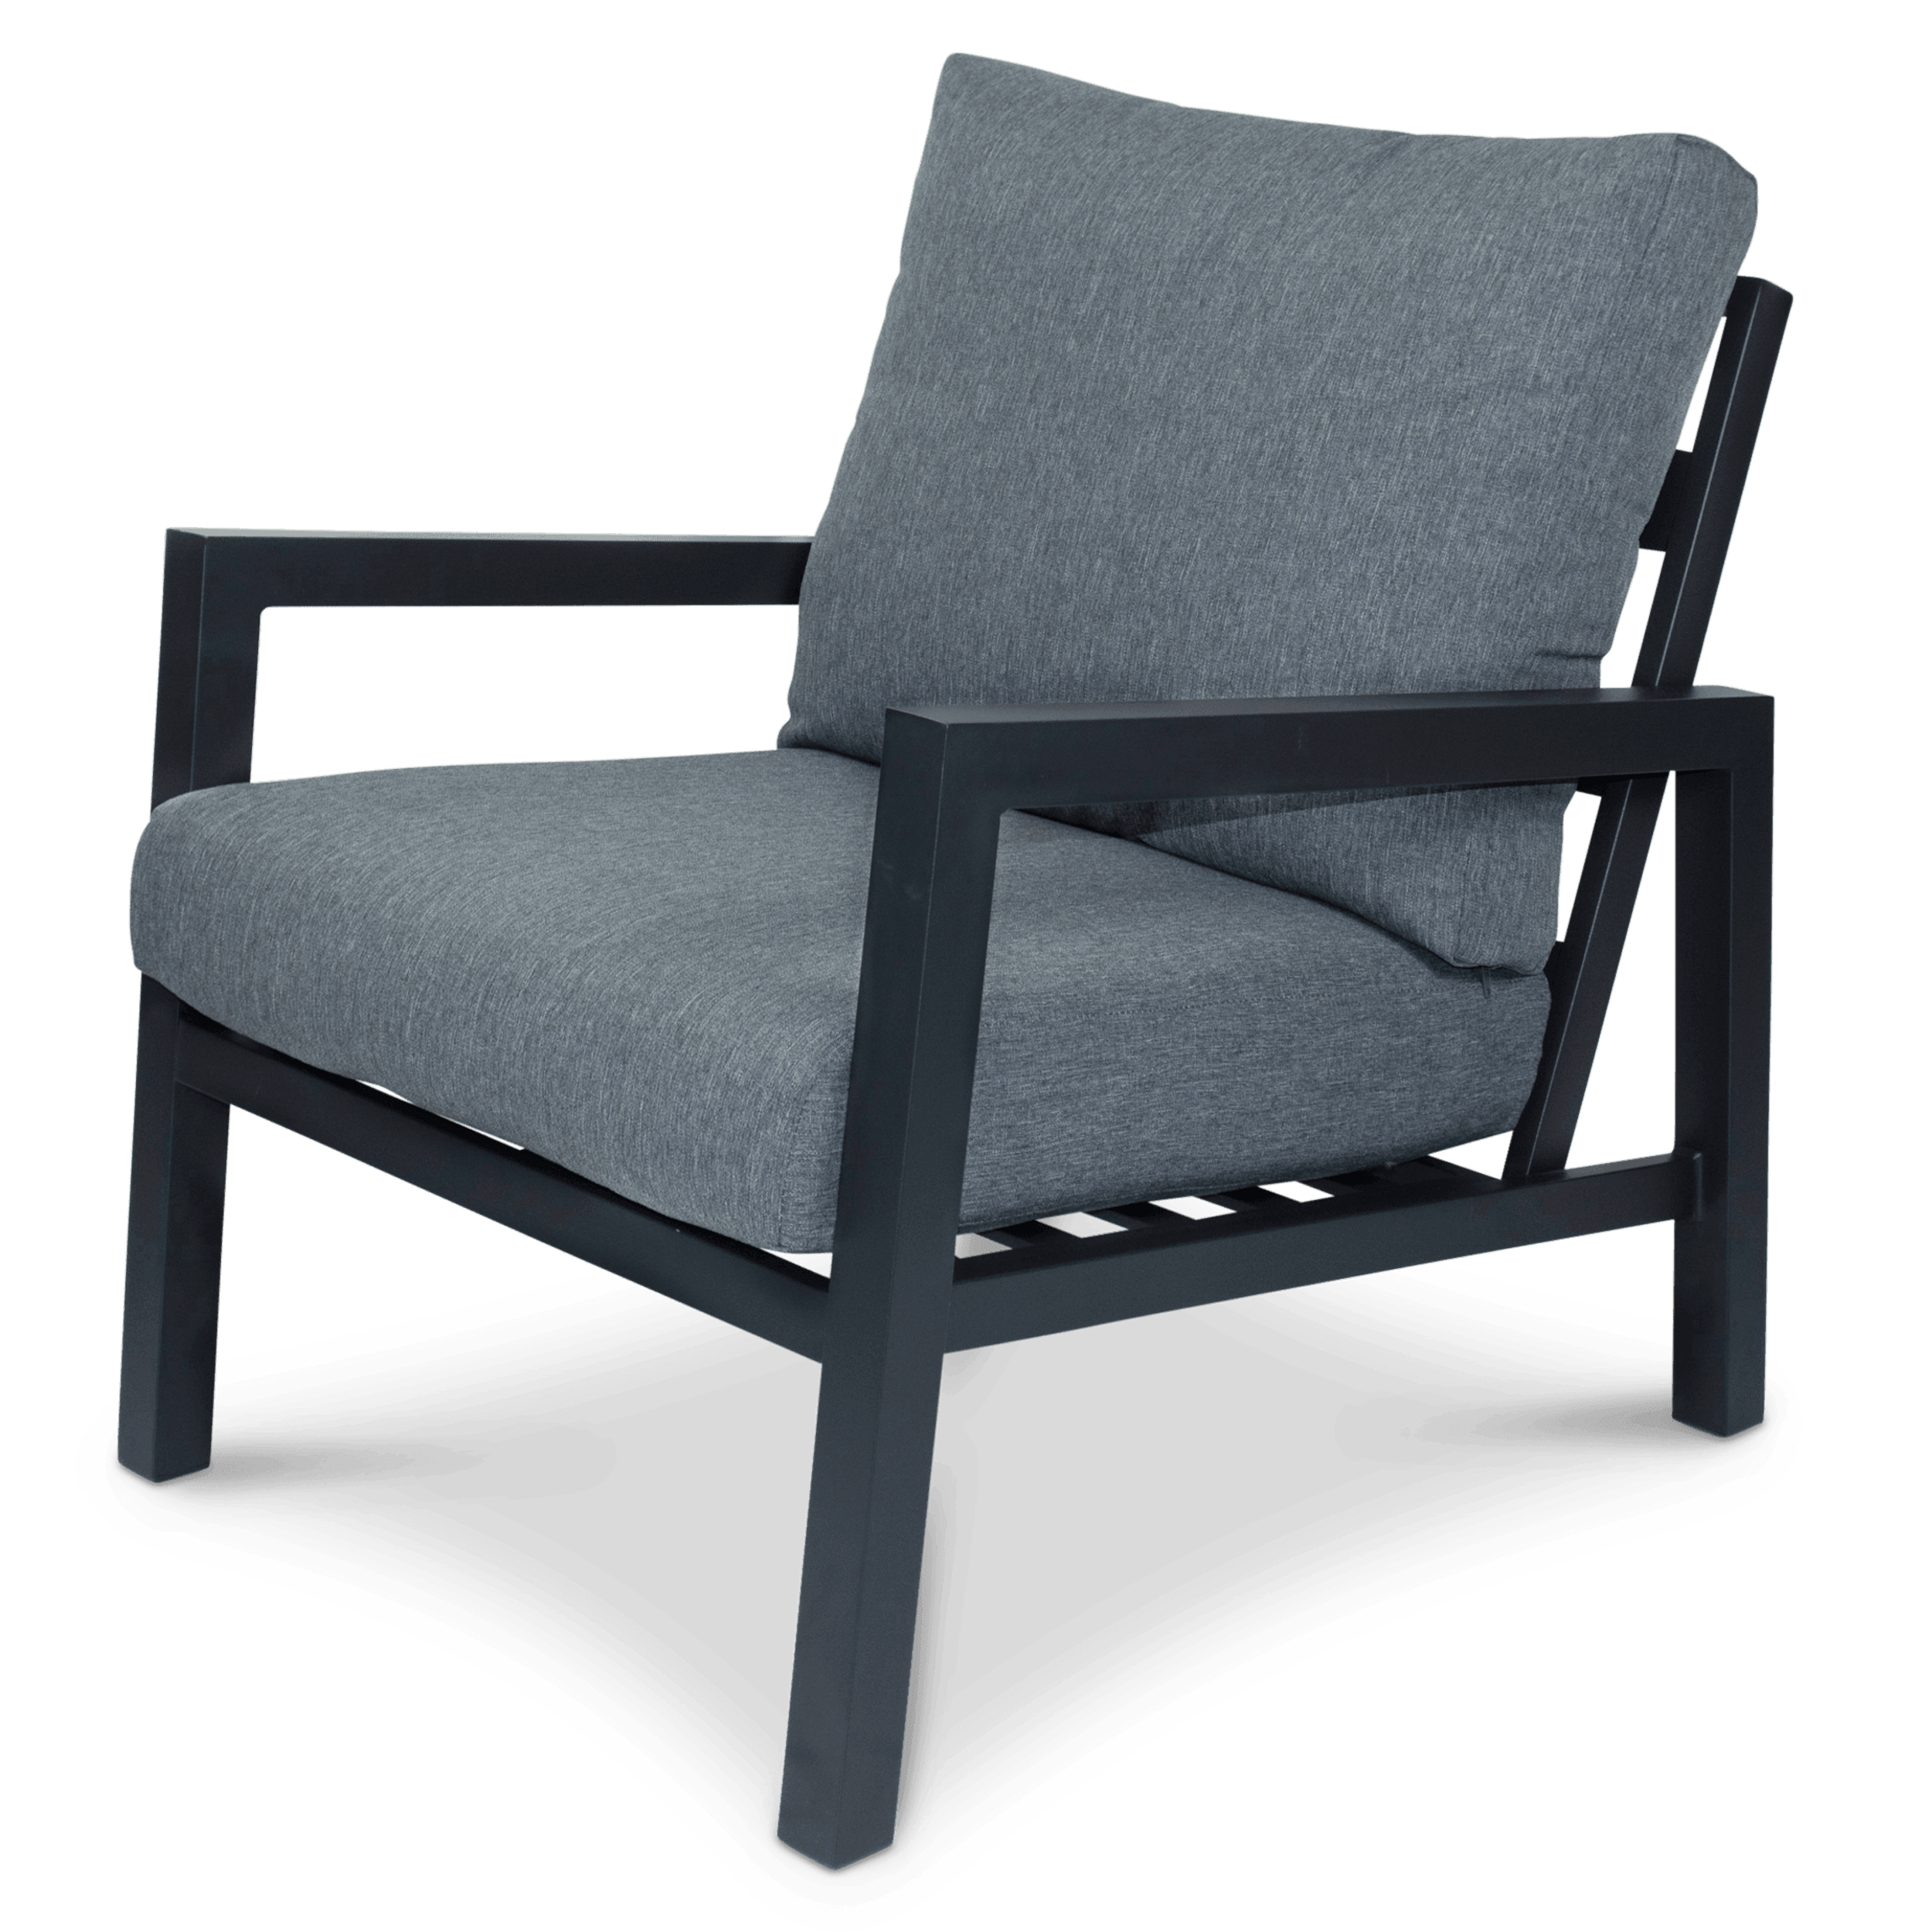 San Sebastian Outdoor Armchair in Gunmetal with Platinum Olefin Cushions